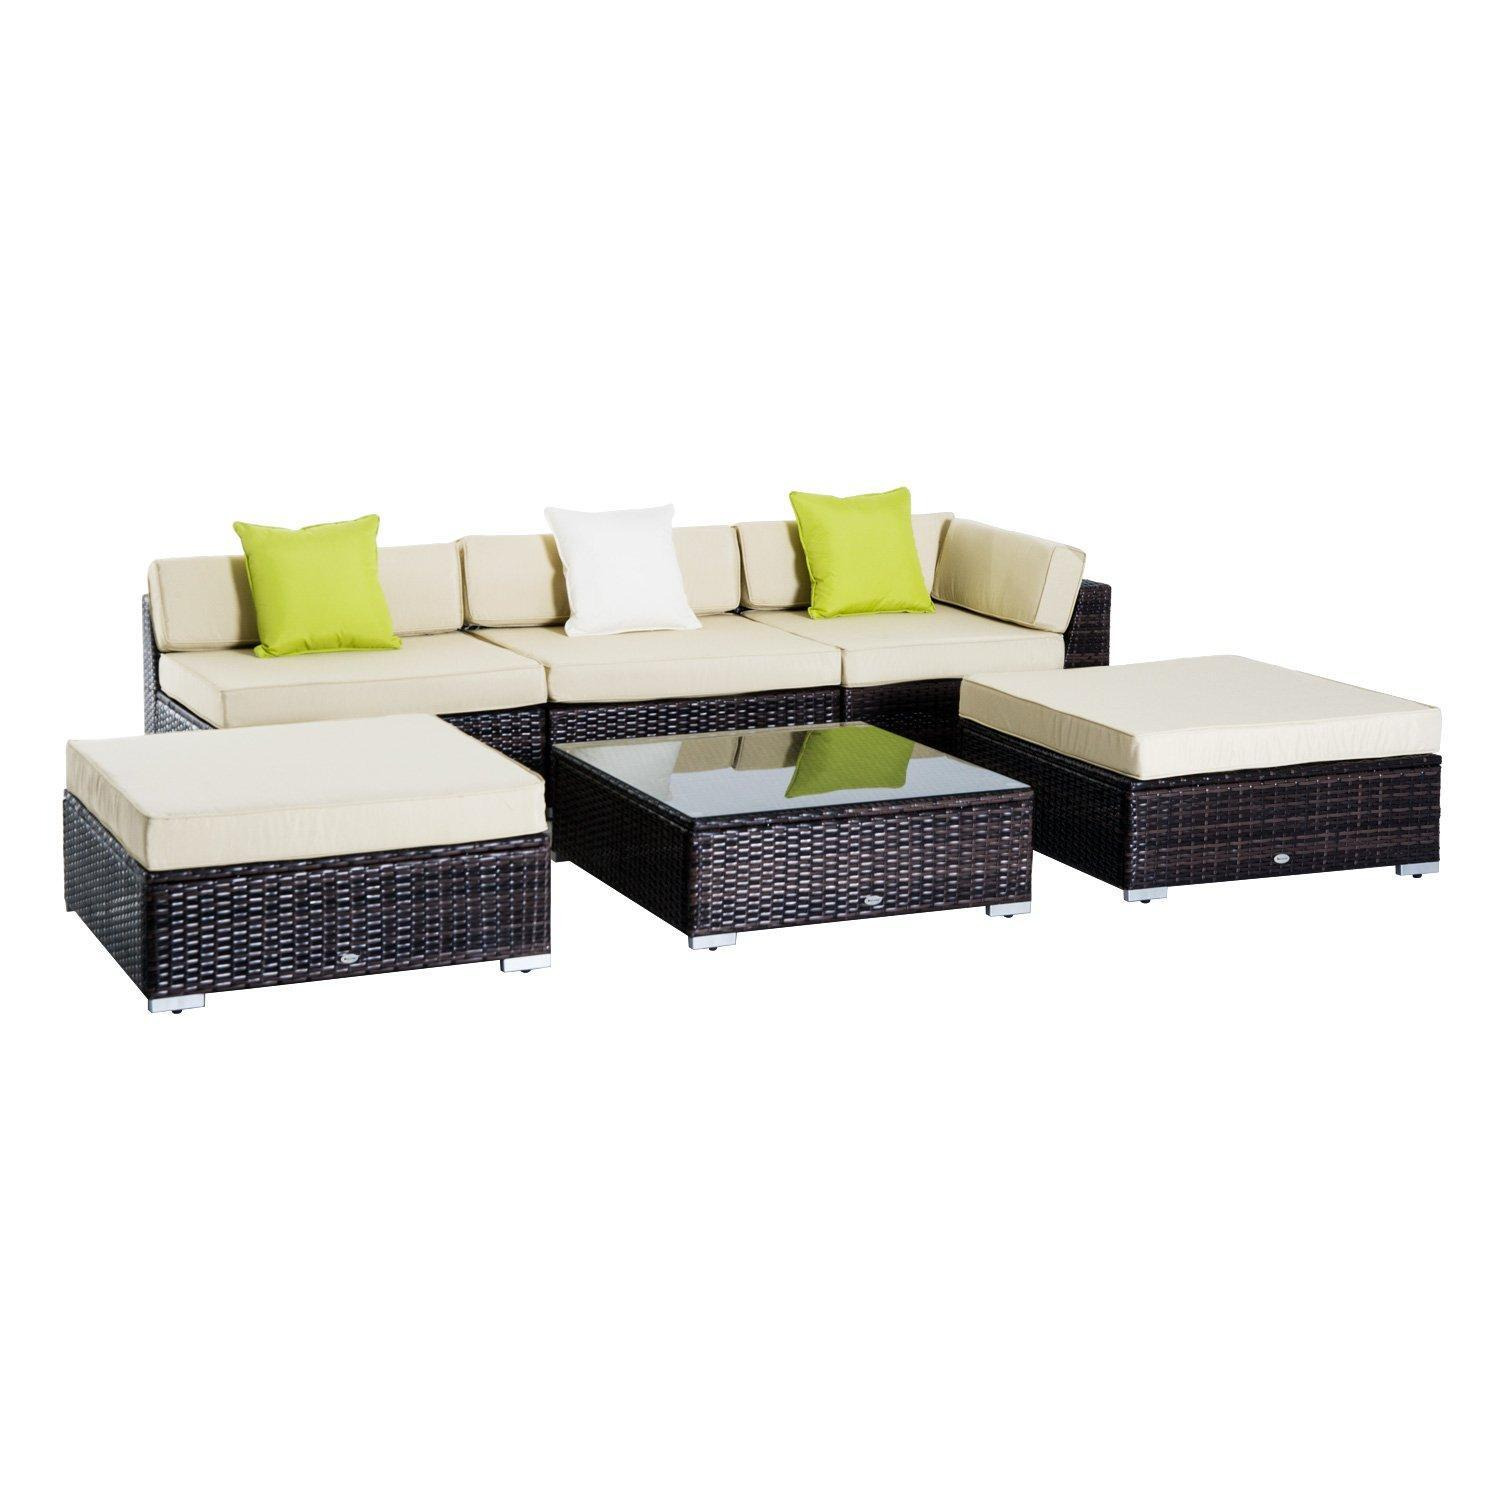 6 PCs Garden Rattan Sofa Set Sectional Wicker Coffee Table Footstool - image 1